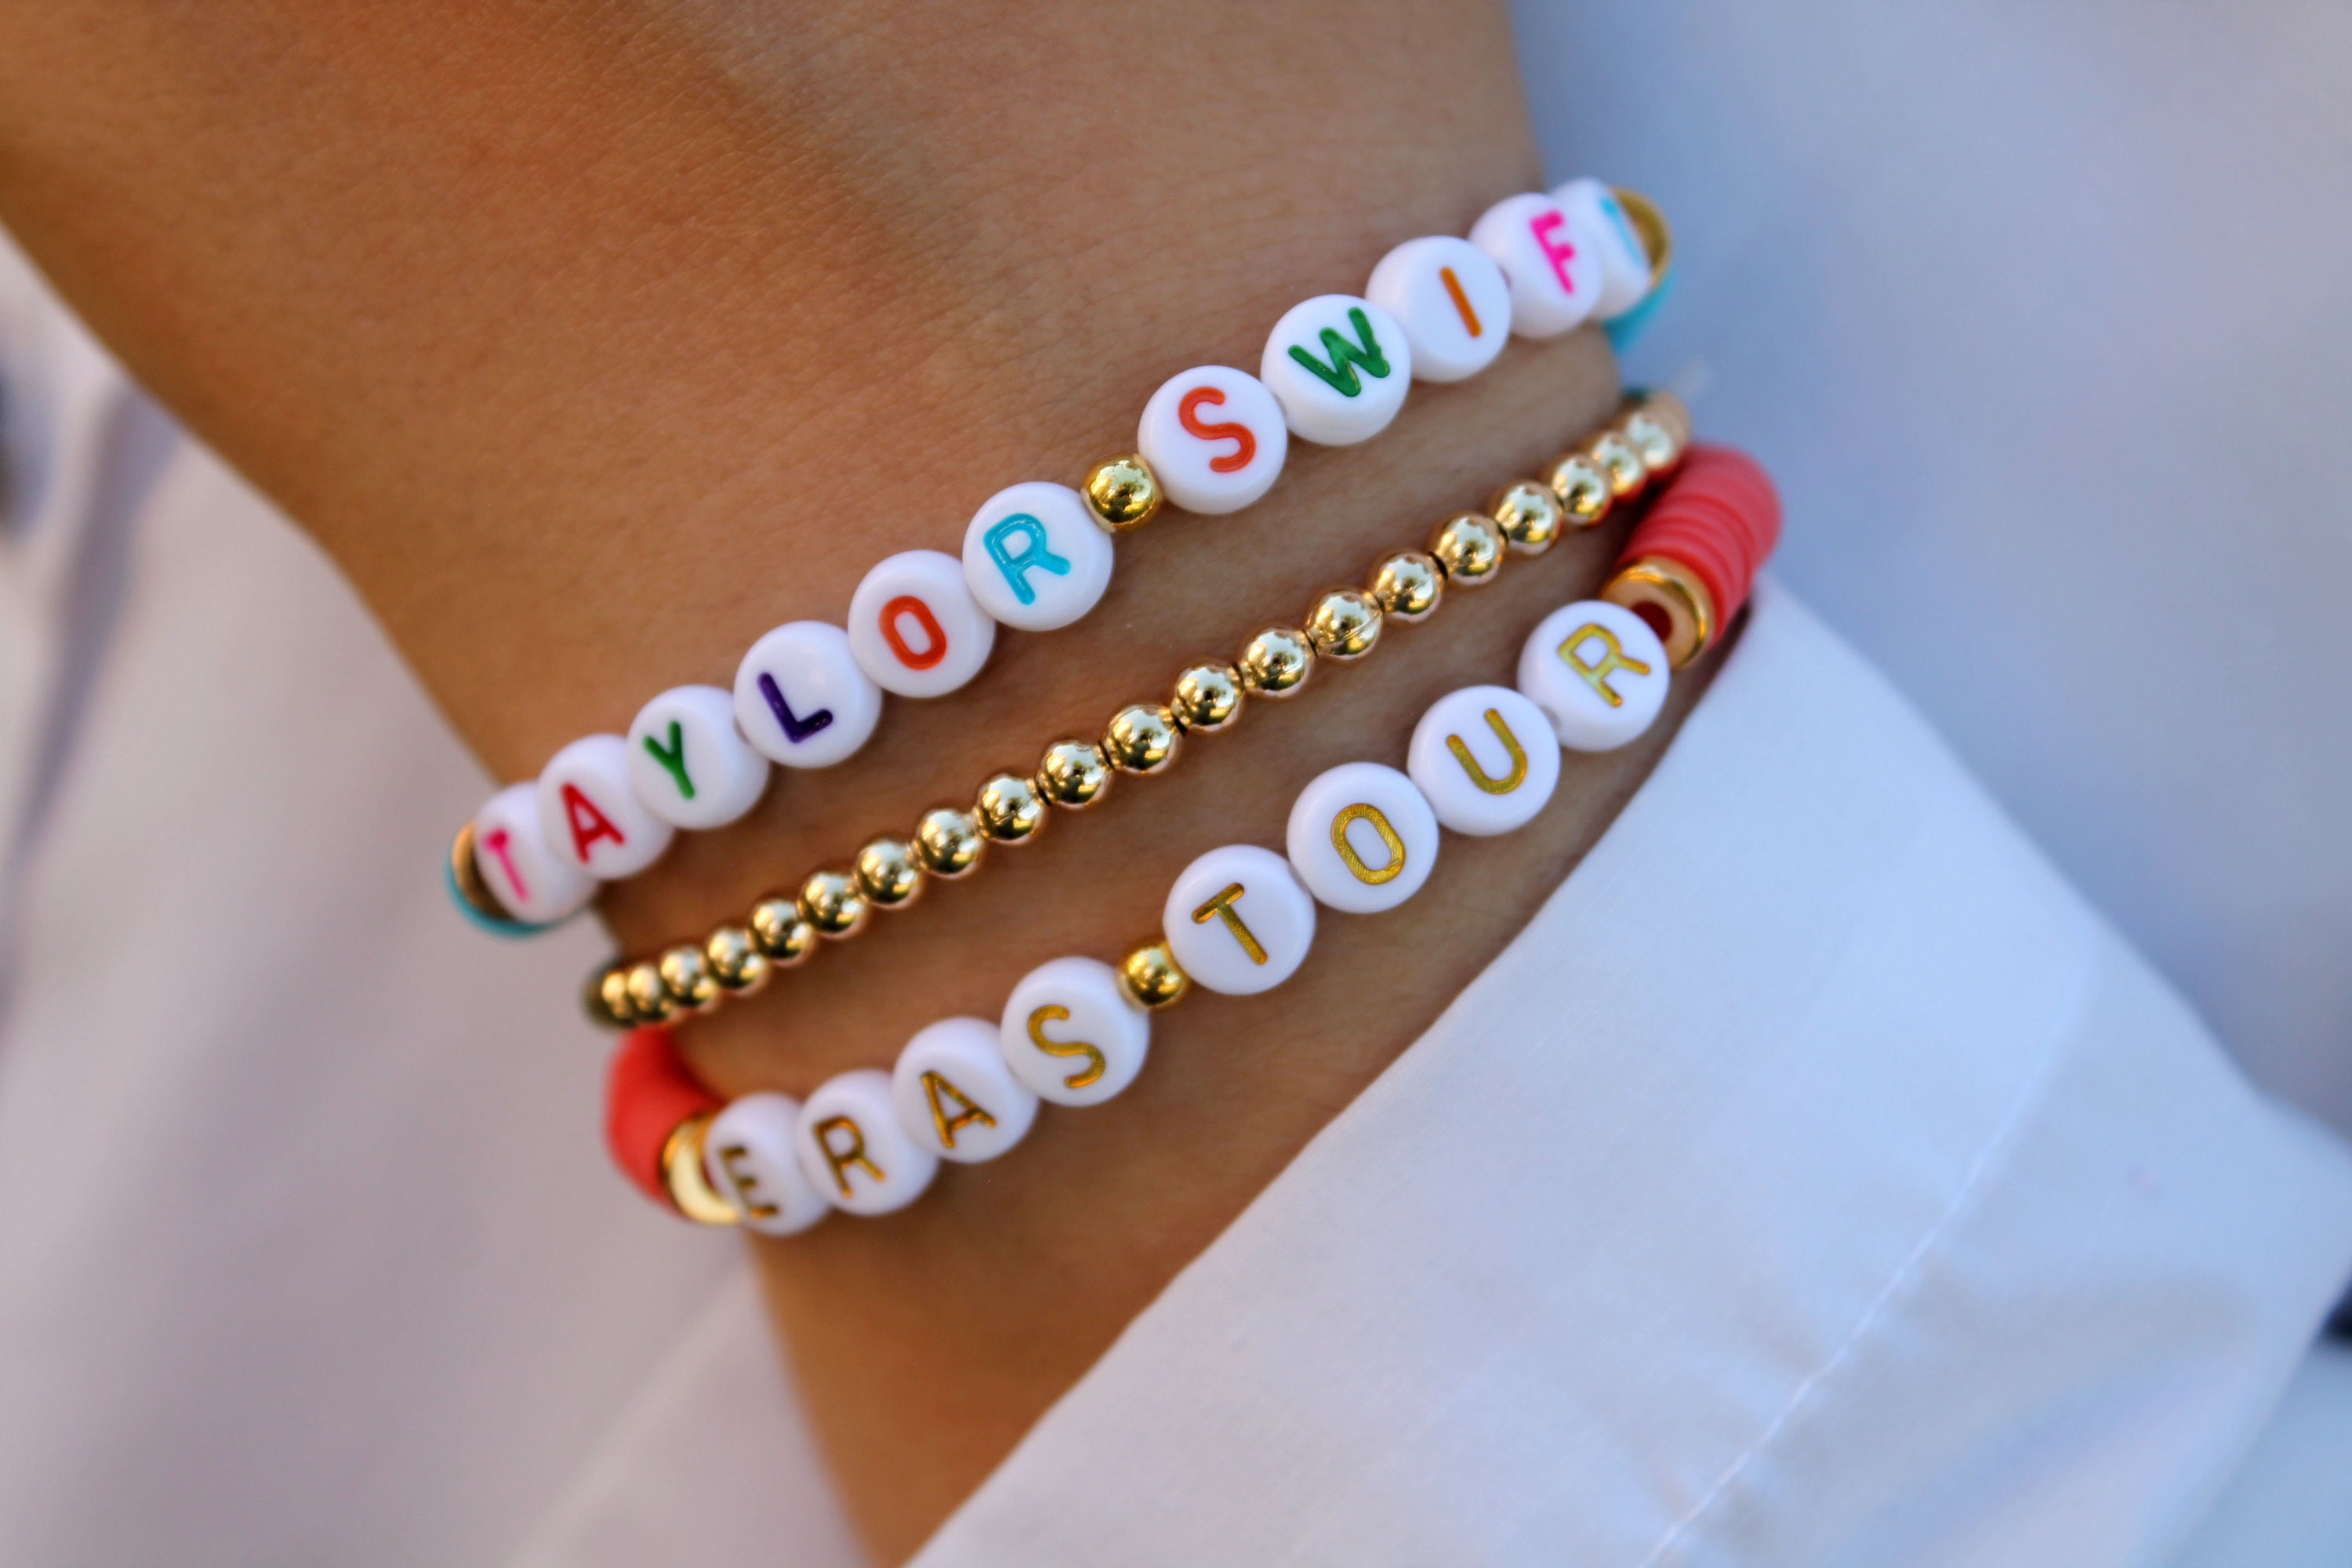 One Taylor Swift-themed Friendship Bracelet Kit 